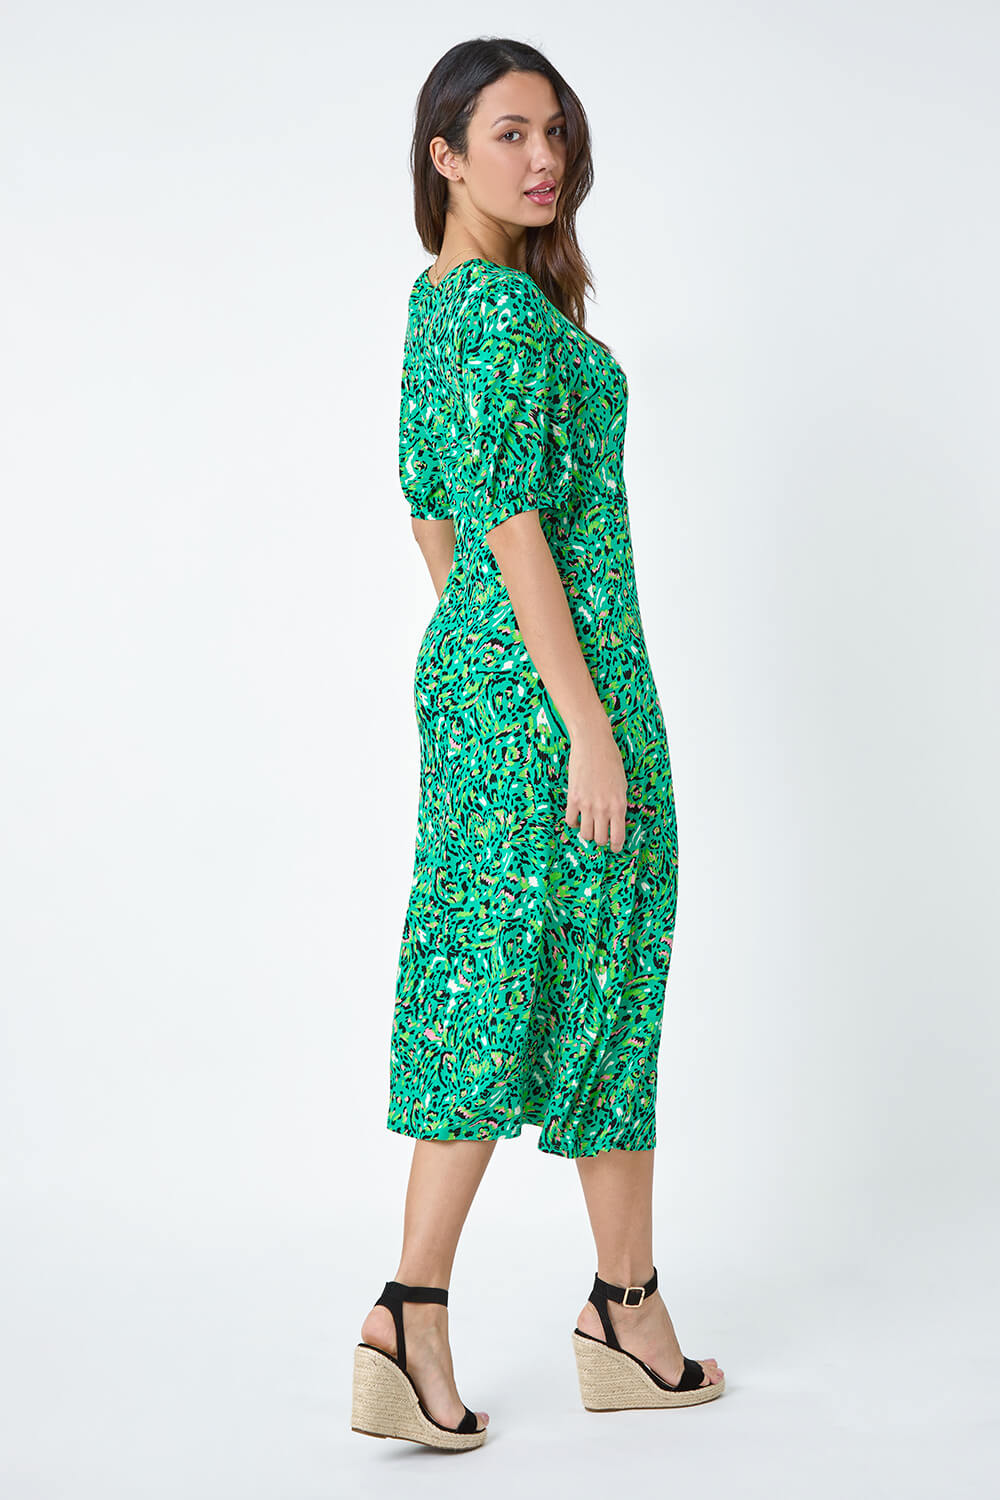 Green Animal Print Keyhole Stretch Dress, Image 3 of 5